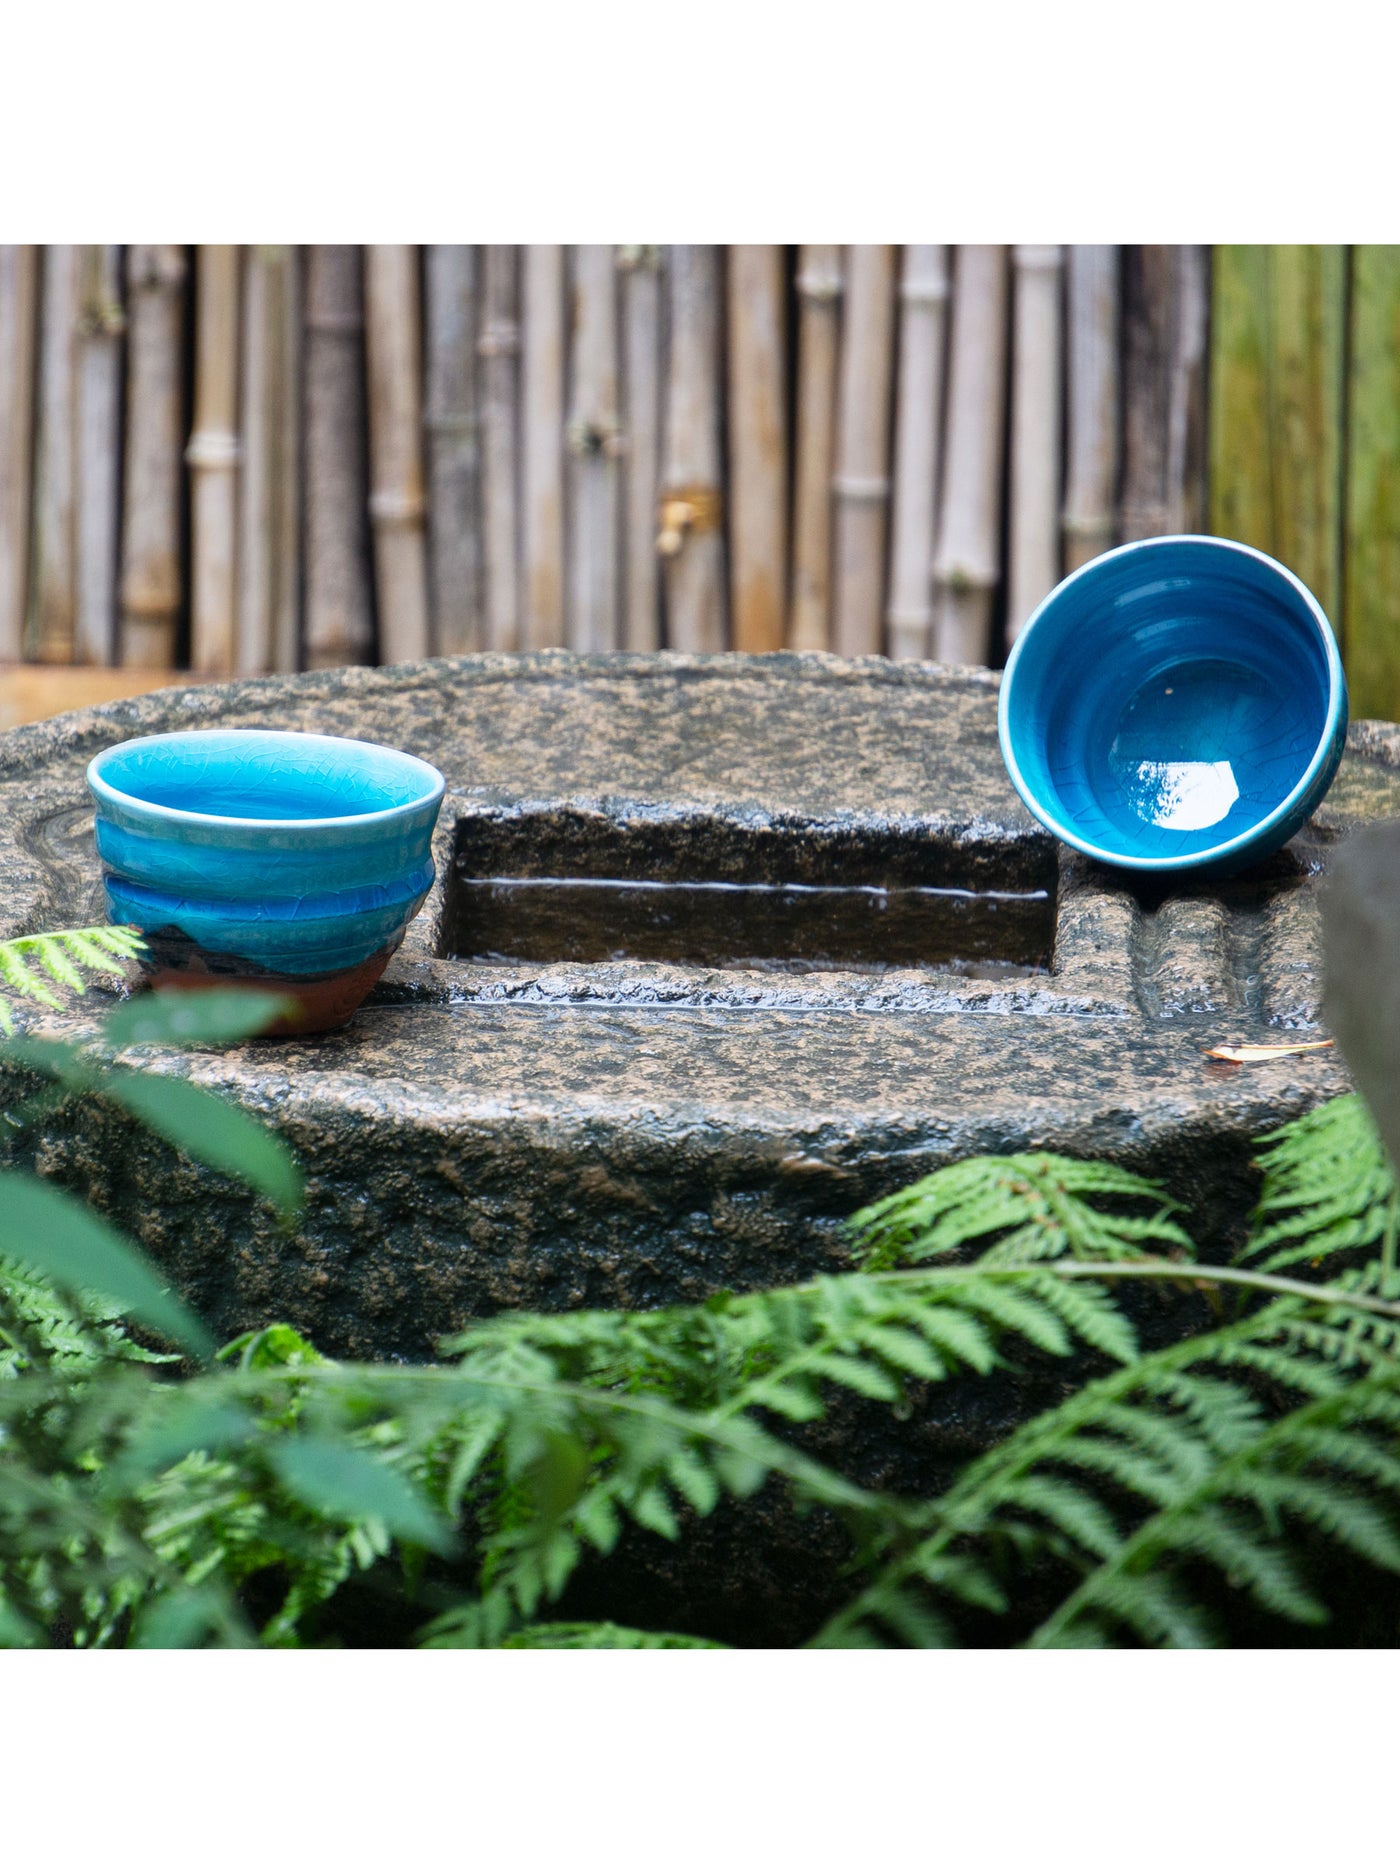 Ku Blue Kyoto Ware Teacup Set by Ninshu (7fl.oz/200ml)